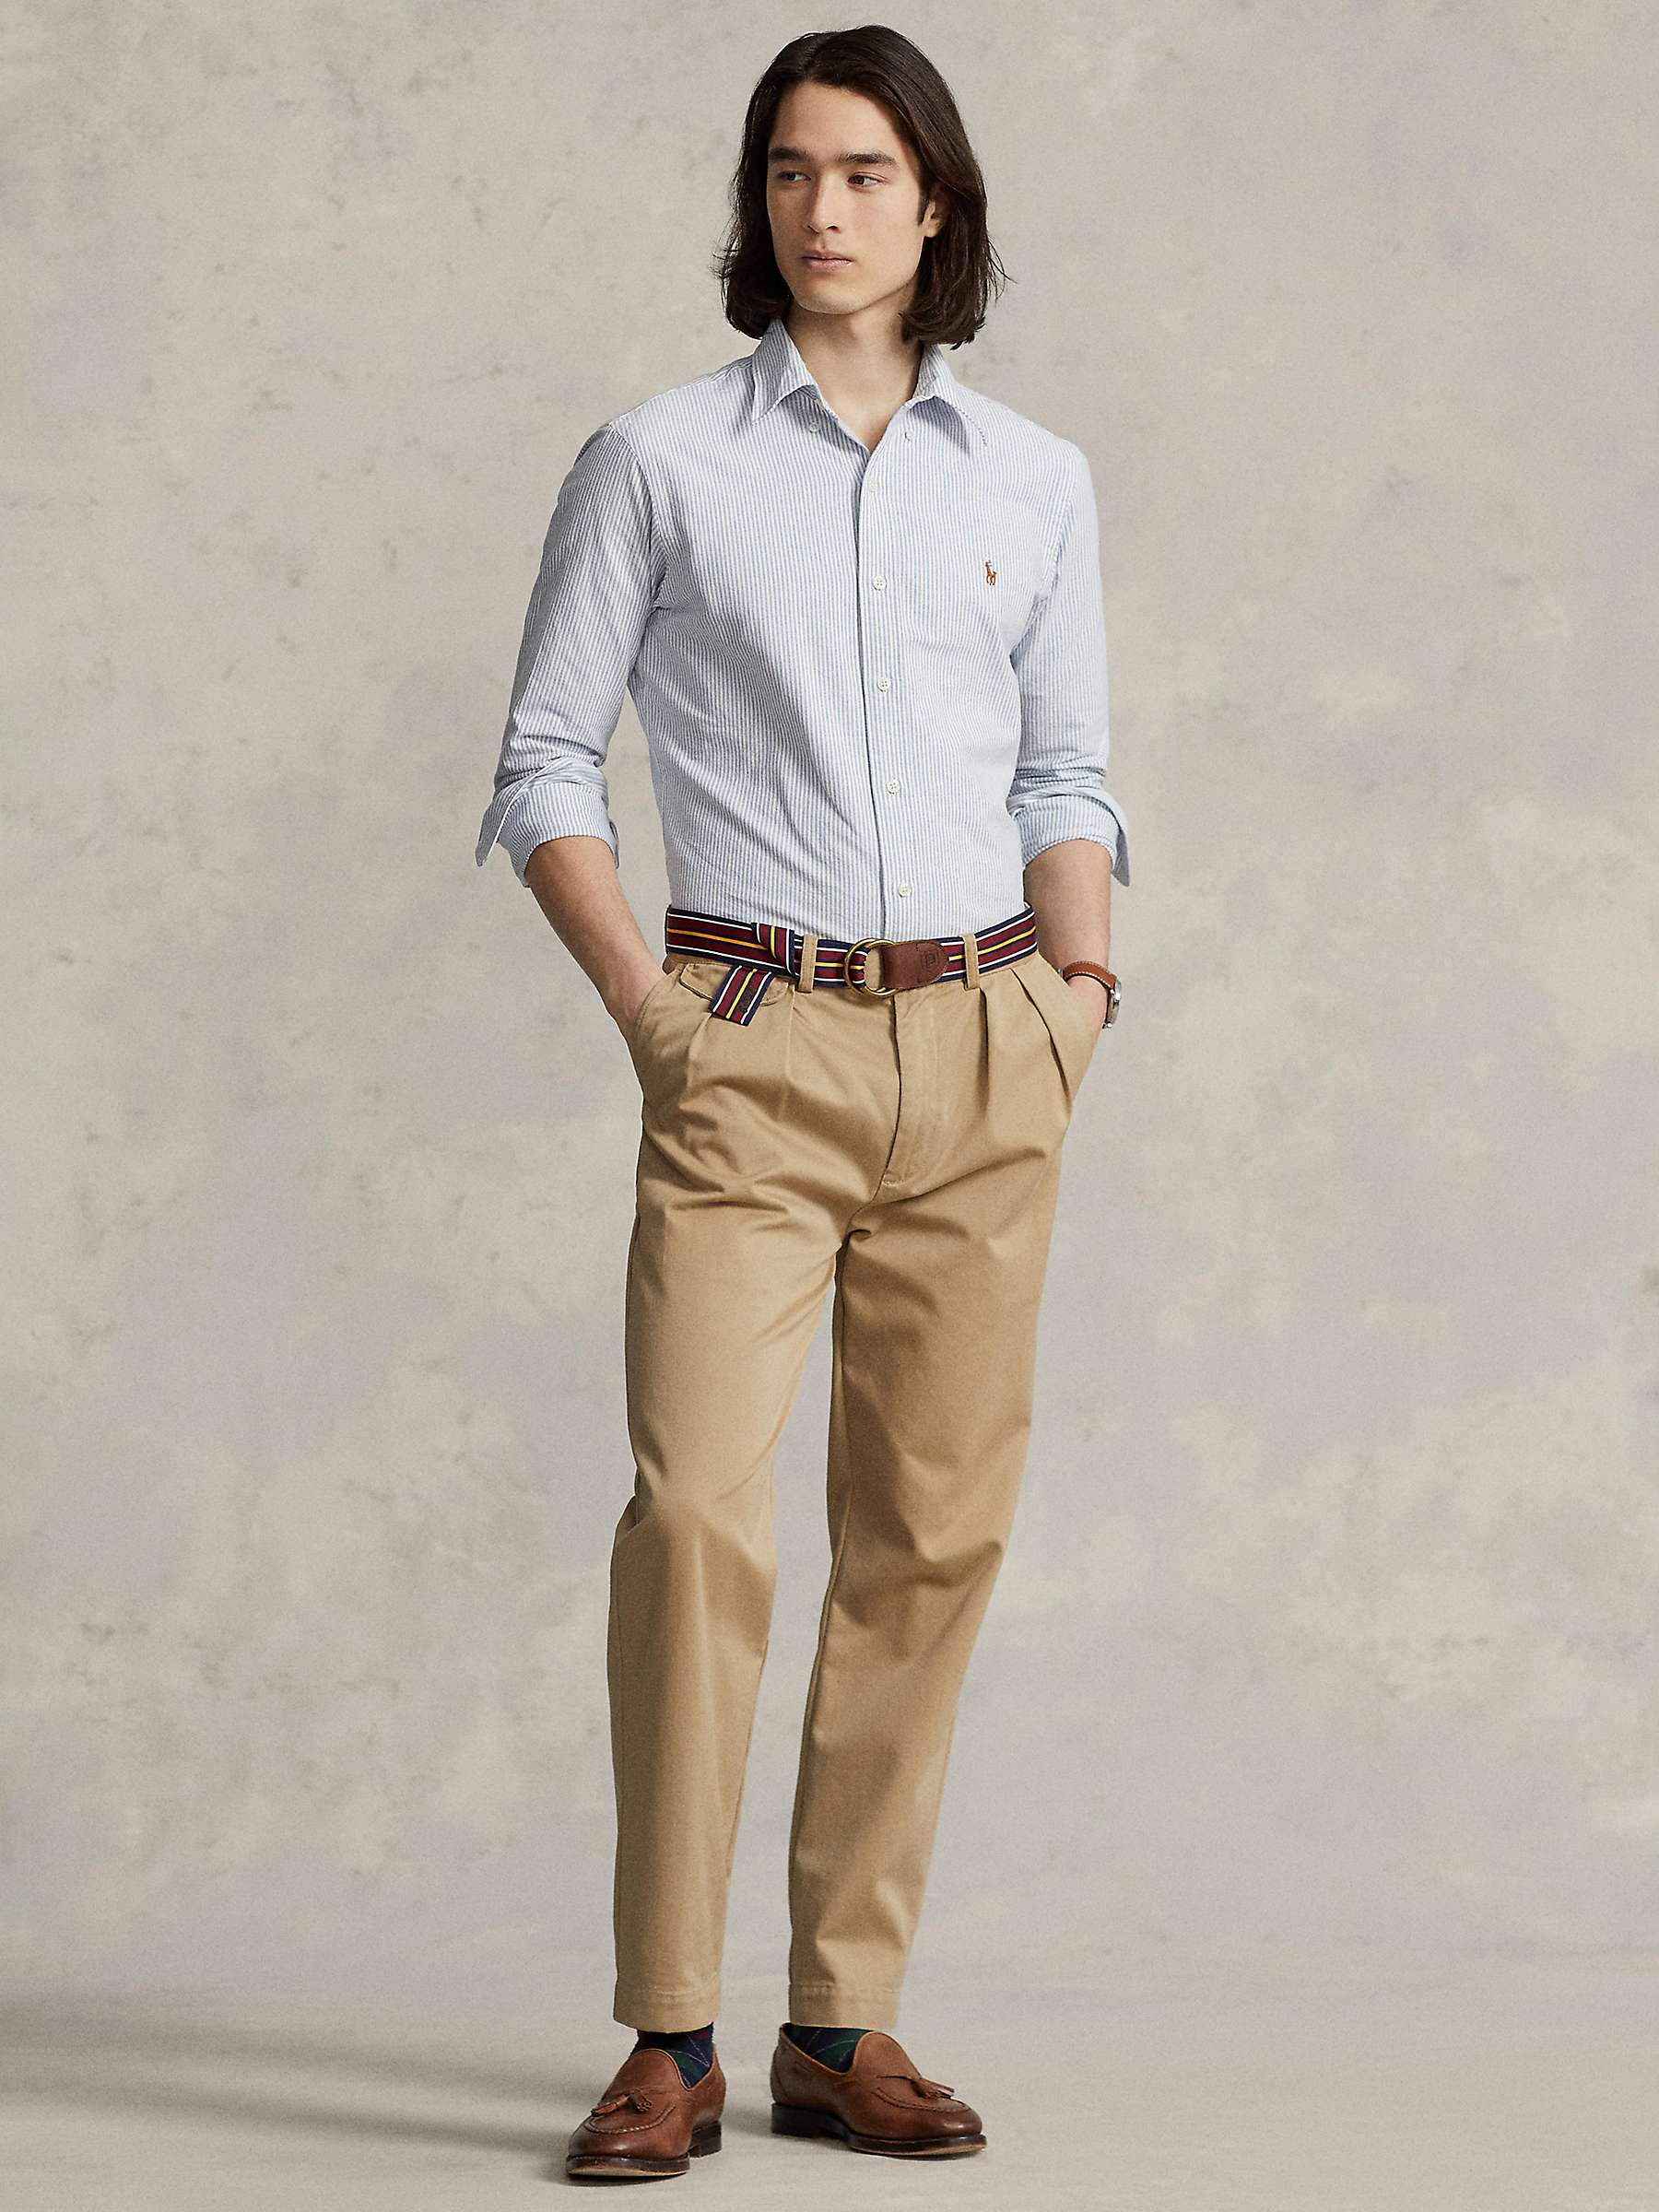 Buy Polo Ralph Lauren Striped Oxford Shirt, Blue/White Online at johnlewis.com